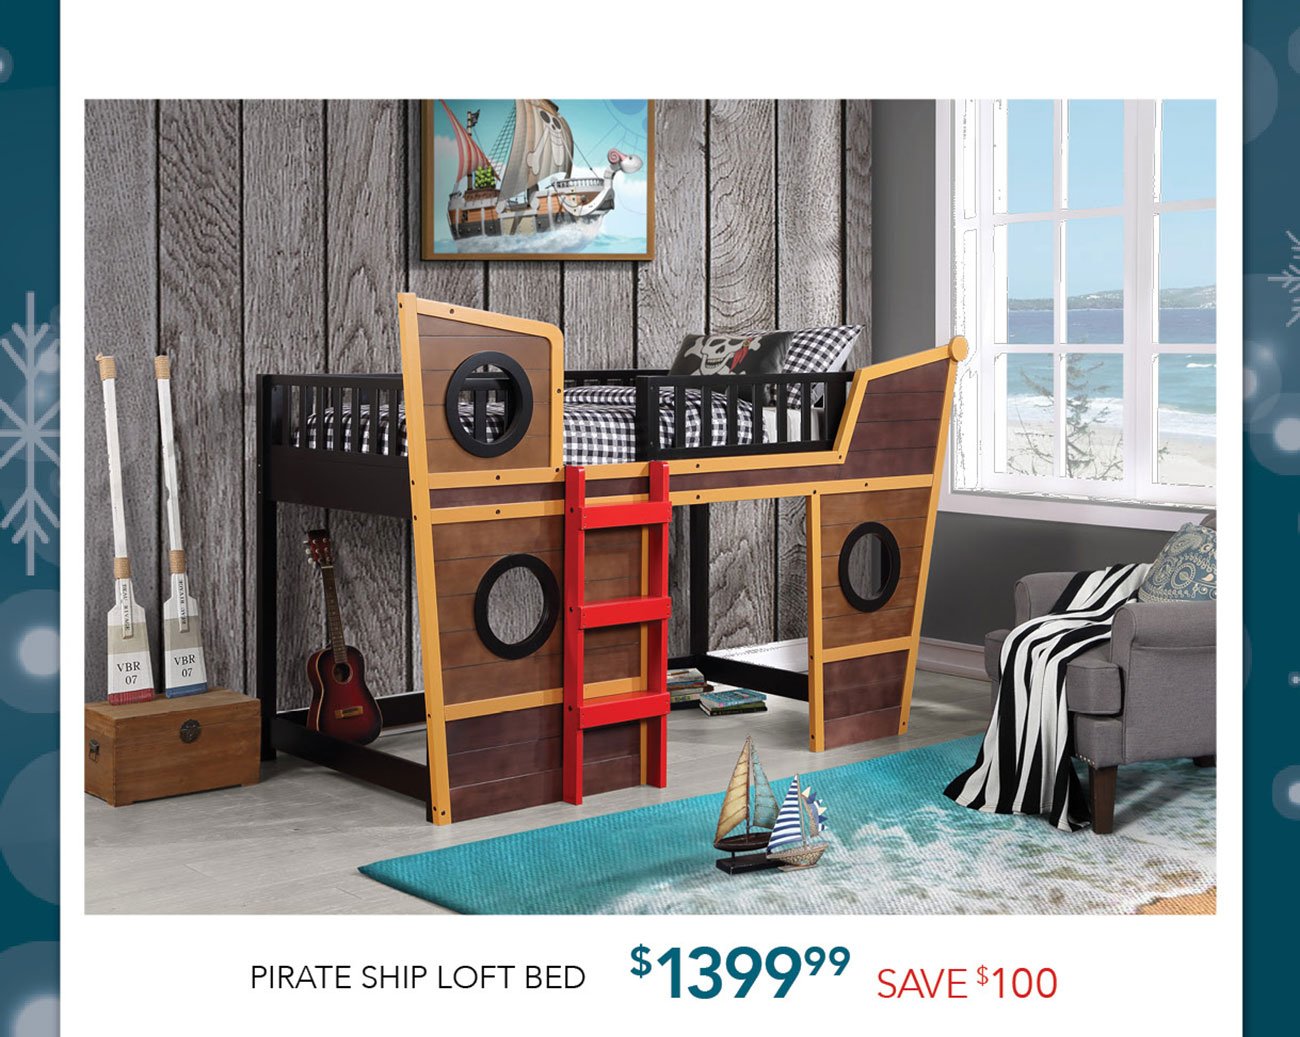 Pirate-ship-loft-bed